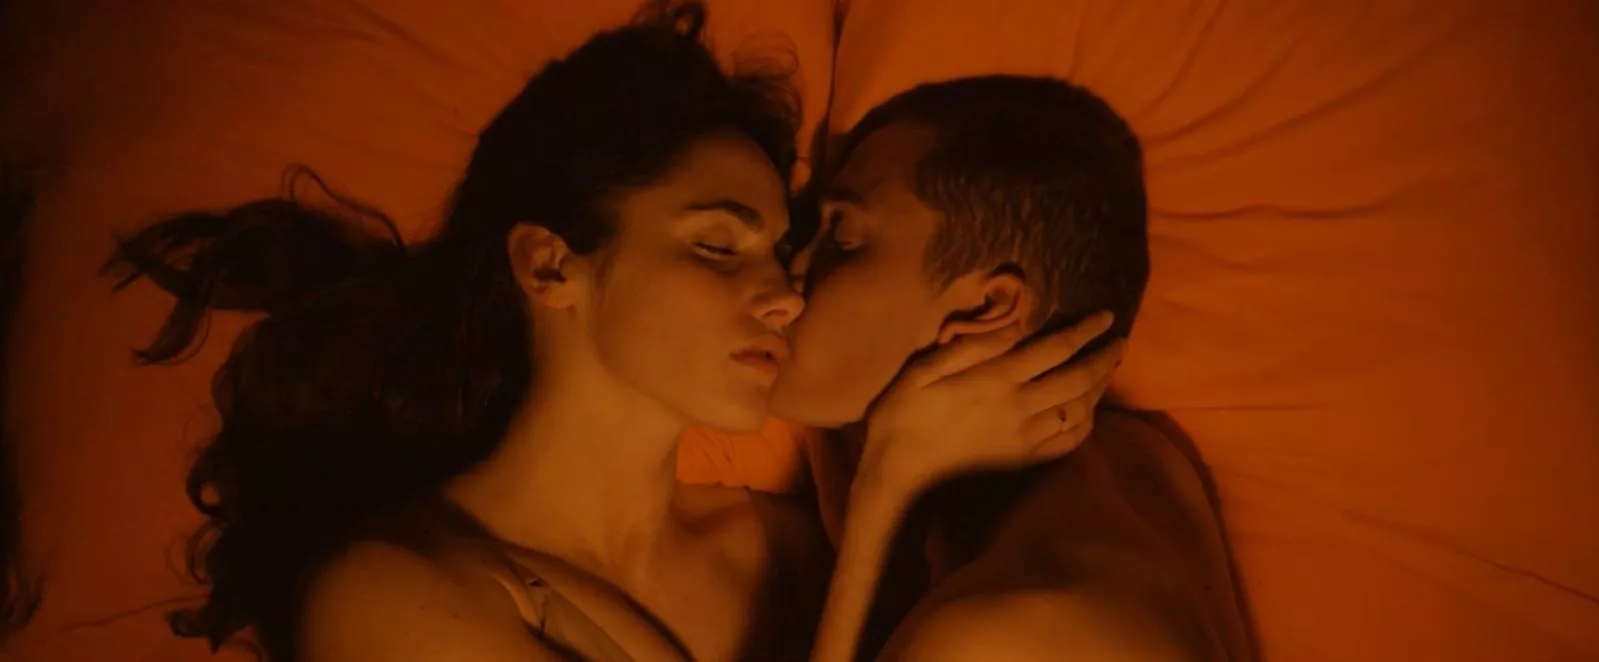 Gaspar noé's 2015 love sex scene